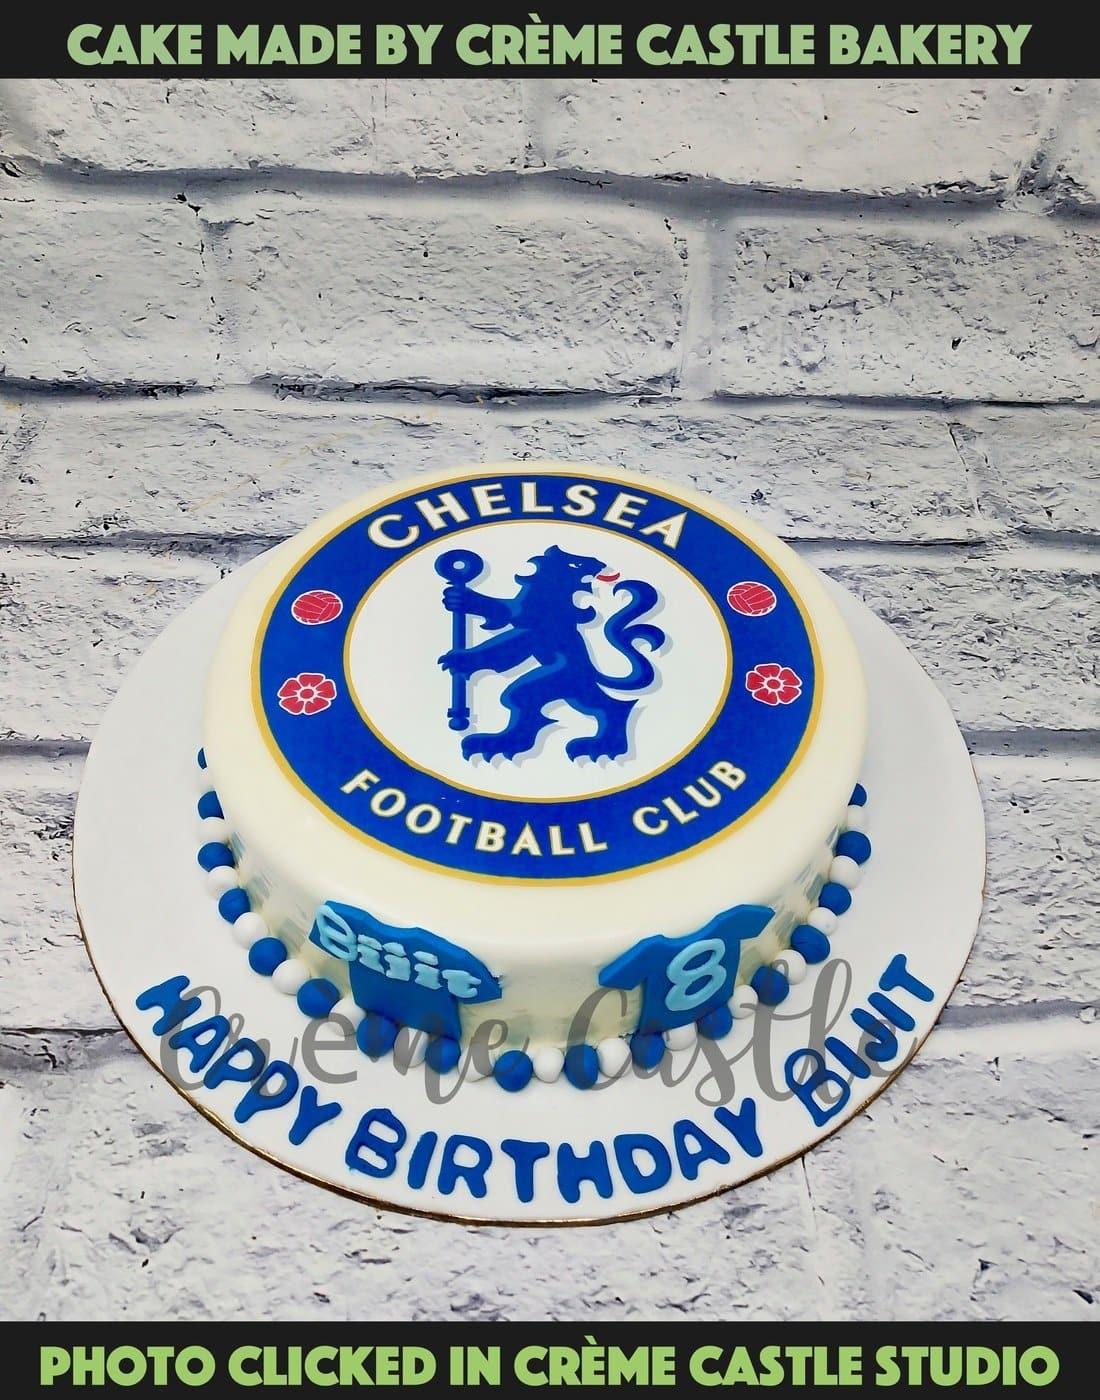 Chelsea Football Club cake